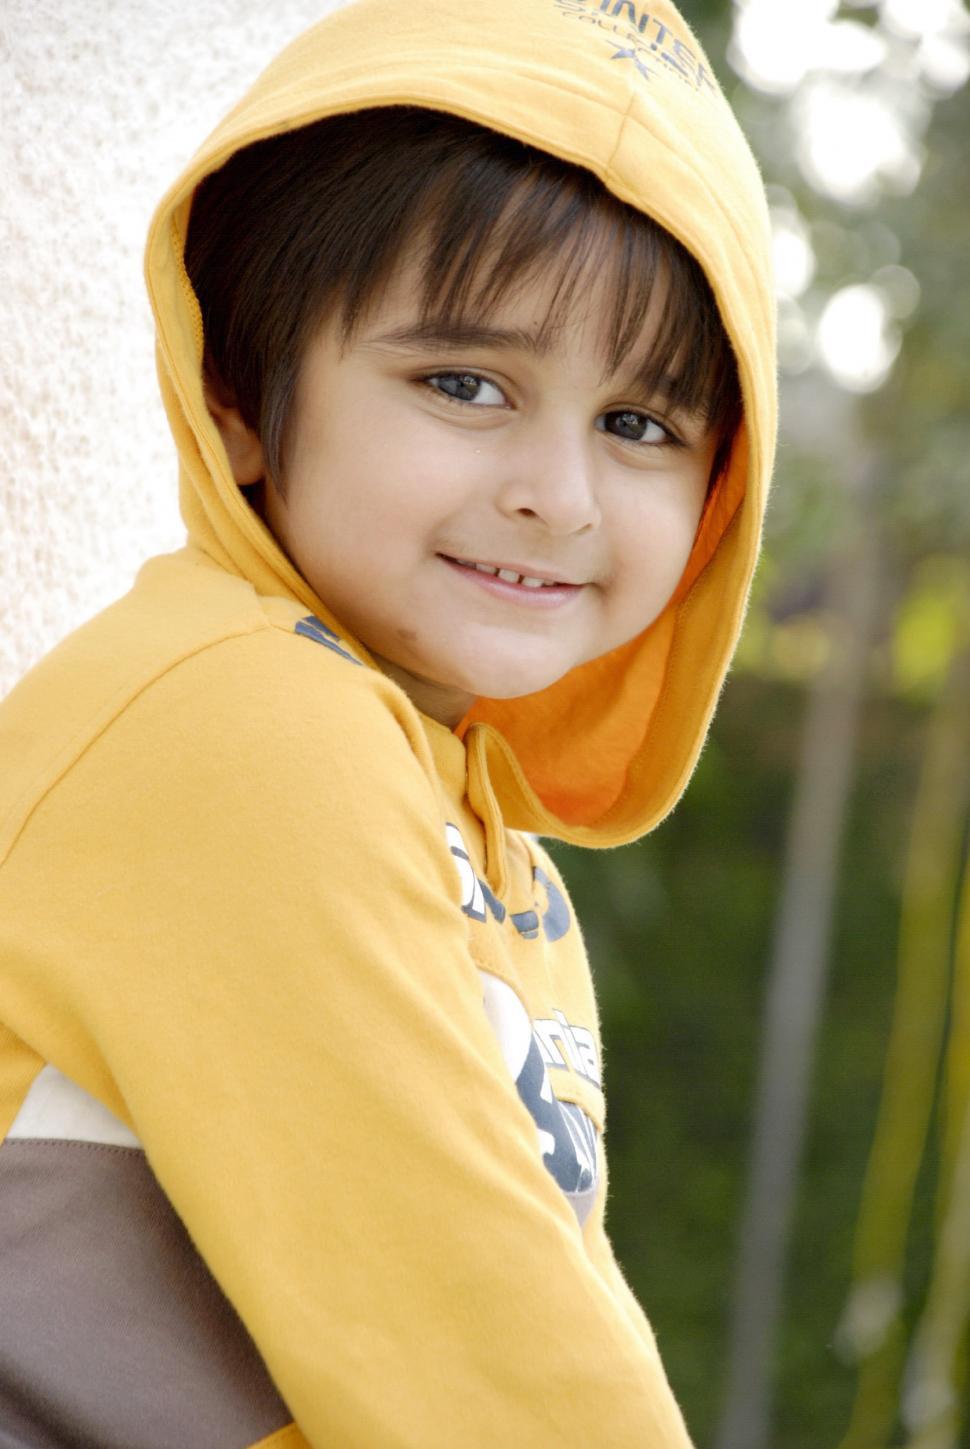 Free Image of Cute Child - Cute Baby Boy 